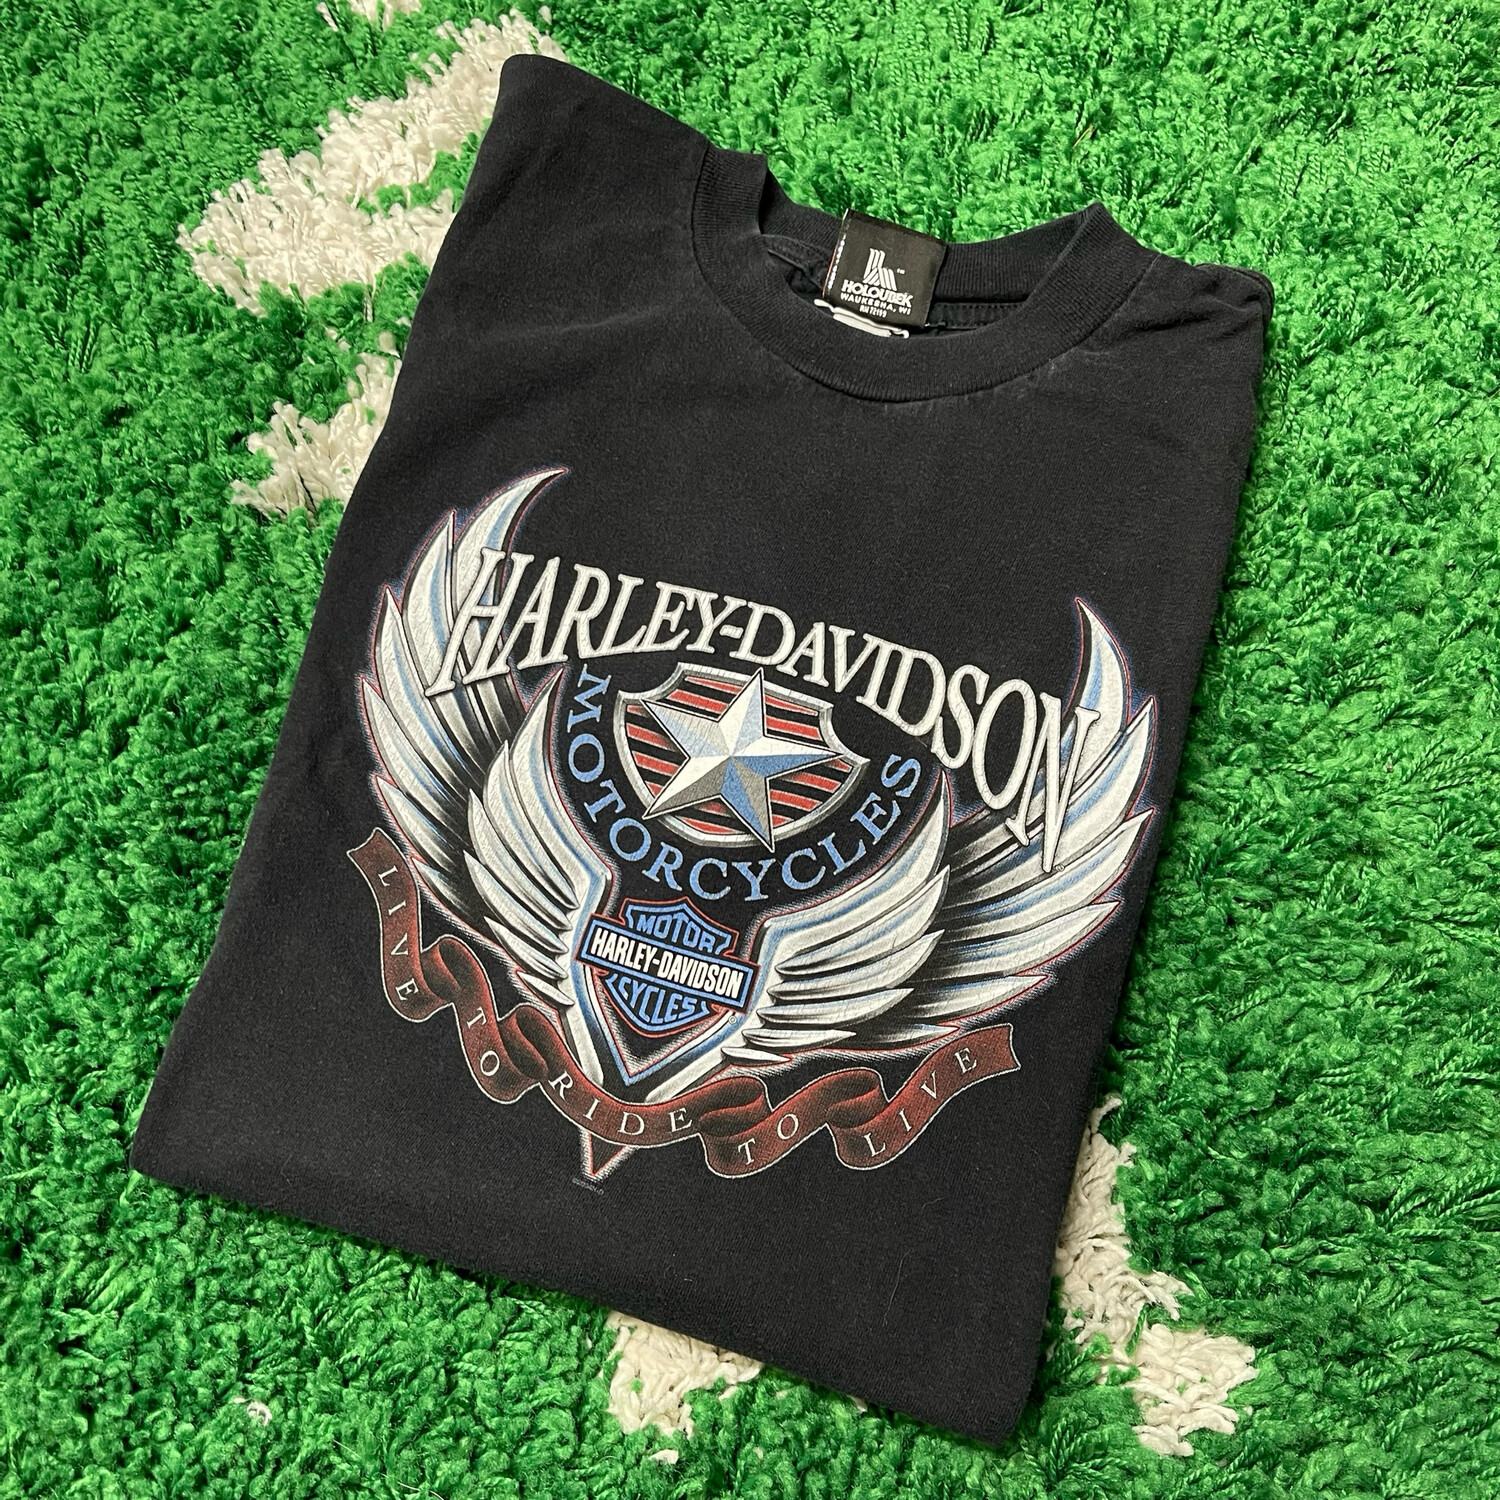 Harley Davidson Live To Ride Tee Size Medium